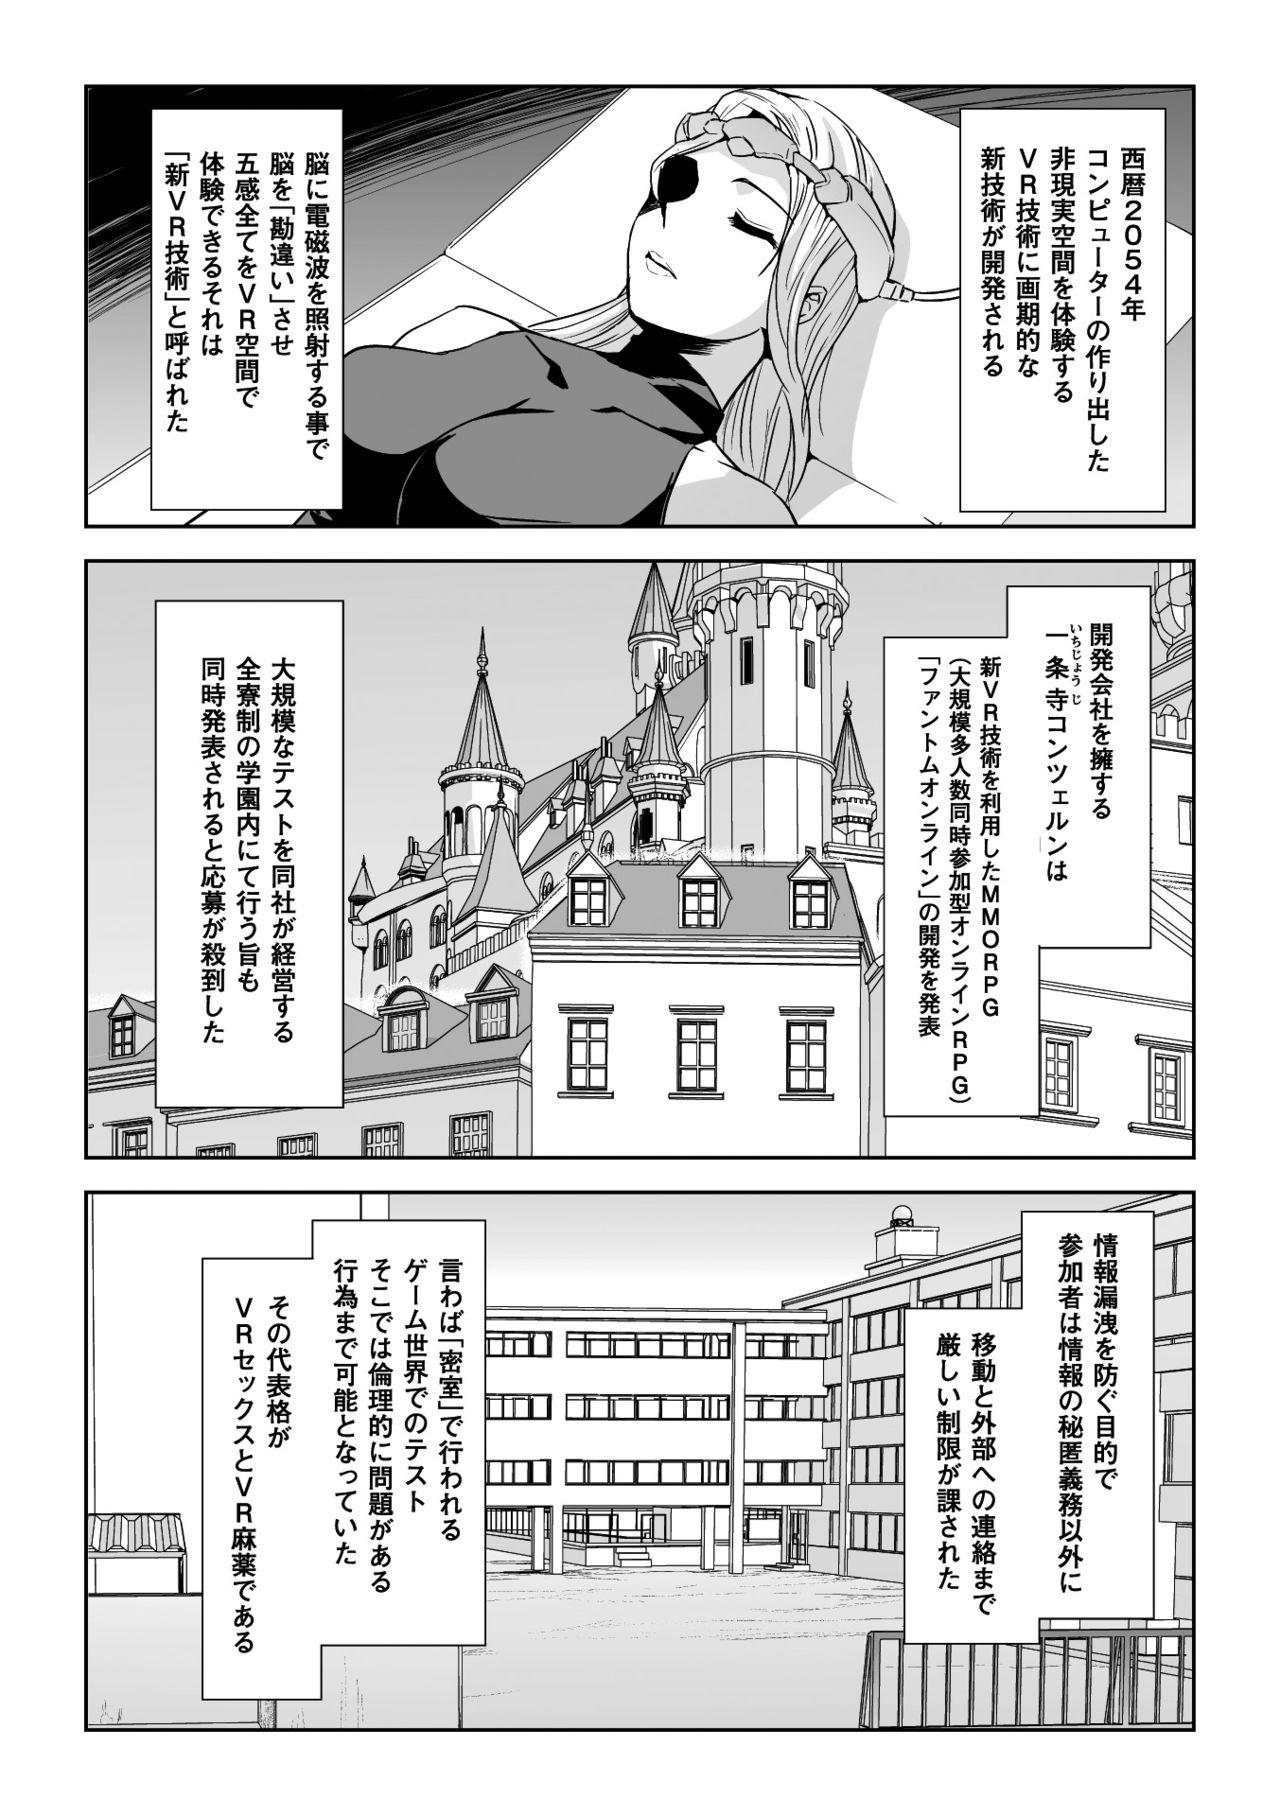 Interview Seigi no Heroine Kangoku File Vol. 14 Twinkstudios - Page 5